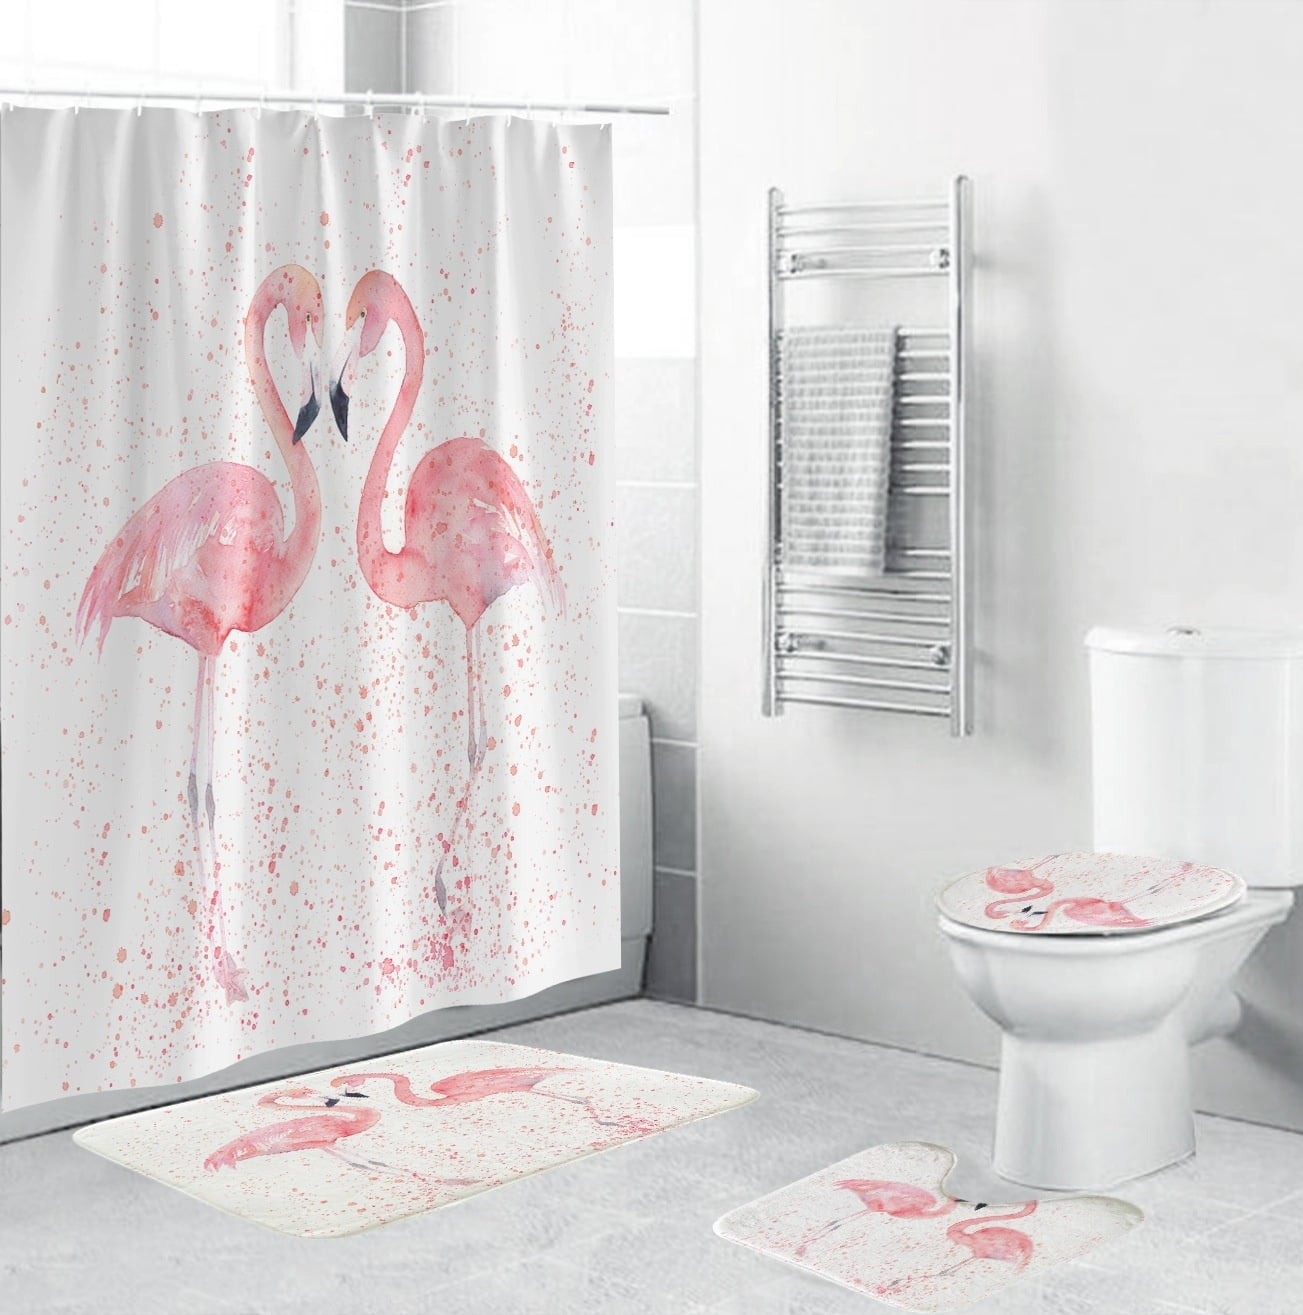 Tropical Plants Flamingo Shower Curtain Waterproof Fabric Bathroom Accessories 